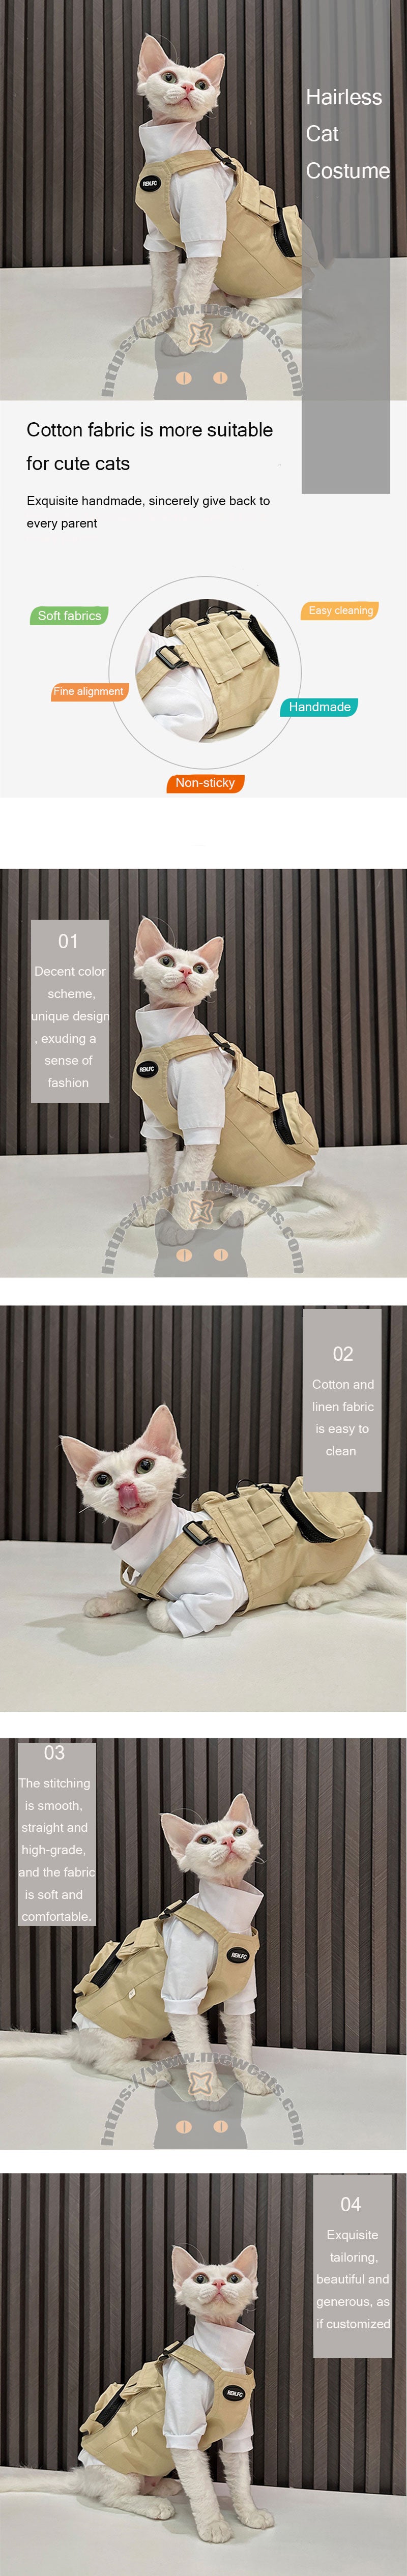 Sphynx Cat Vest 3 Color Devon Hairless Cat Clothes